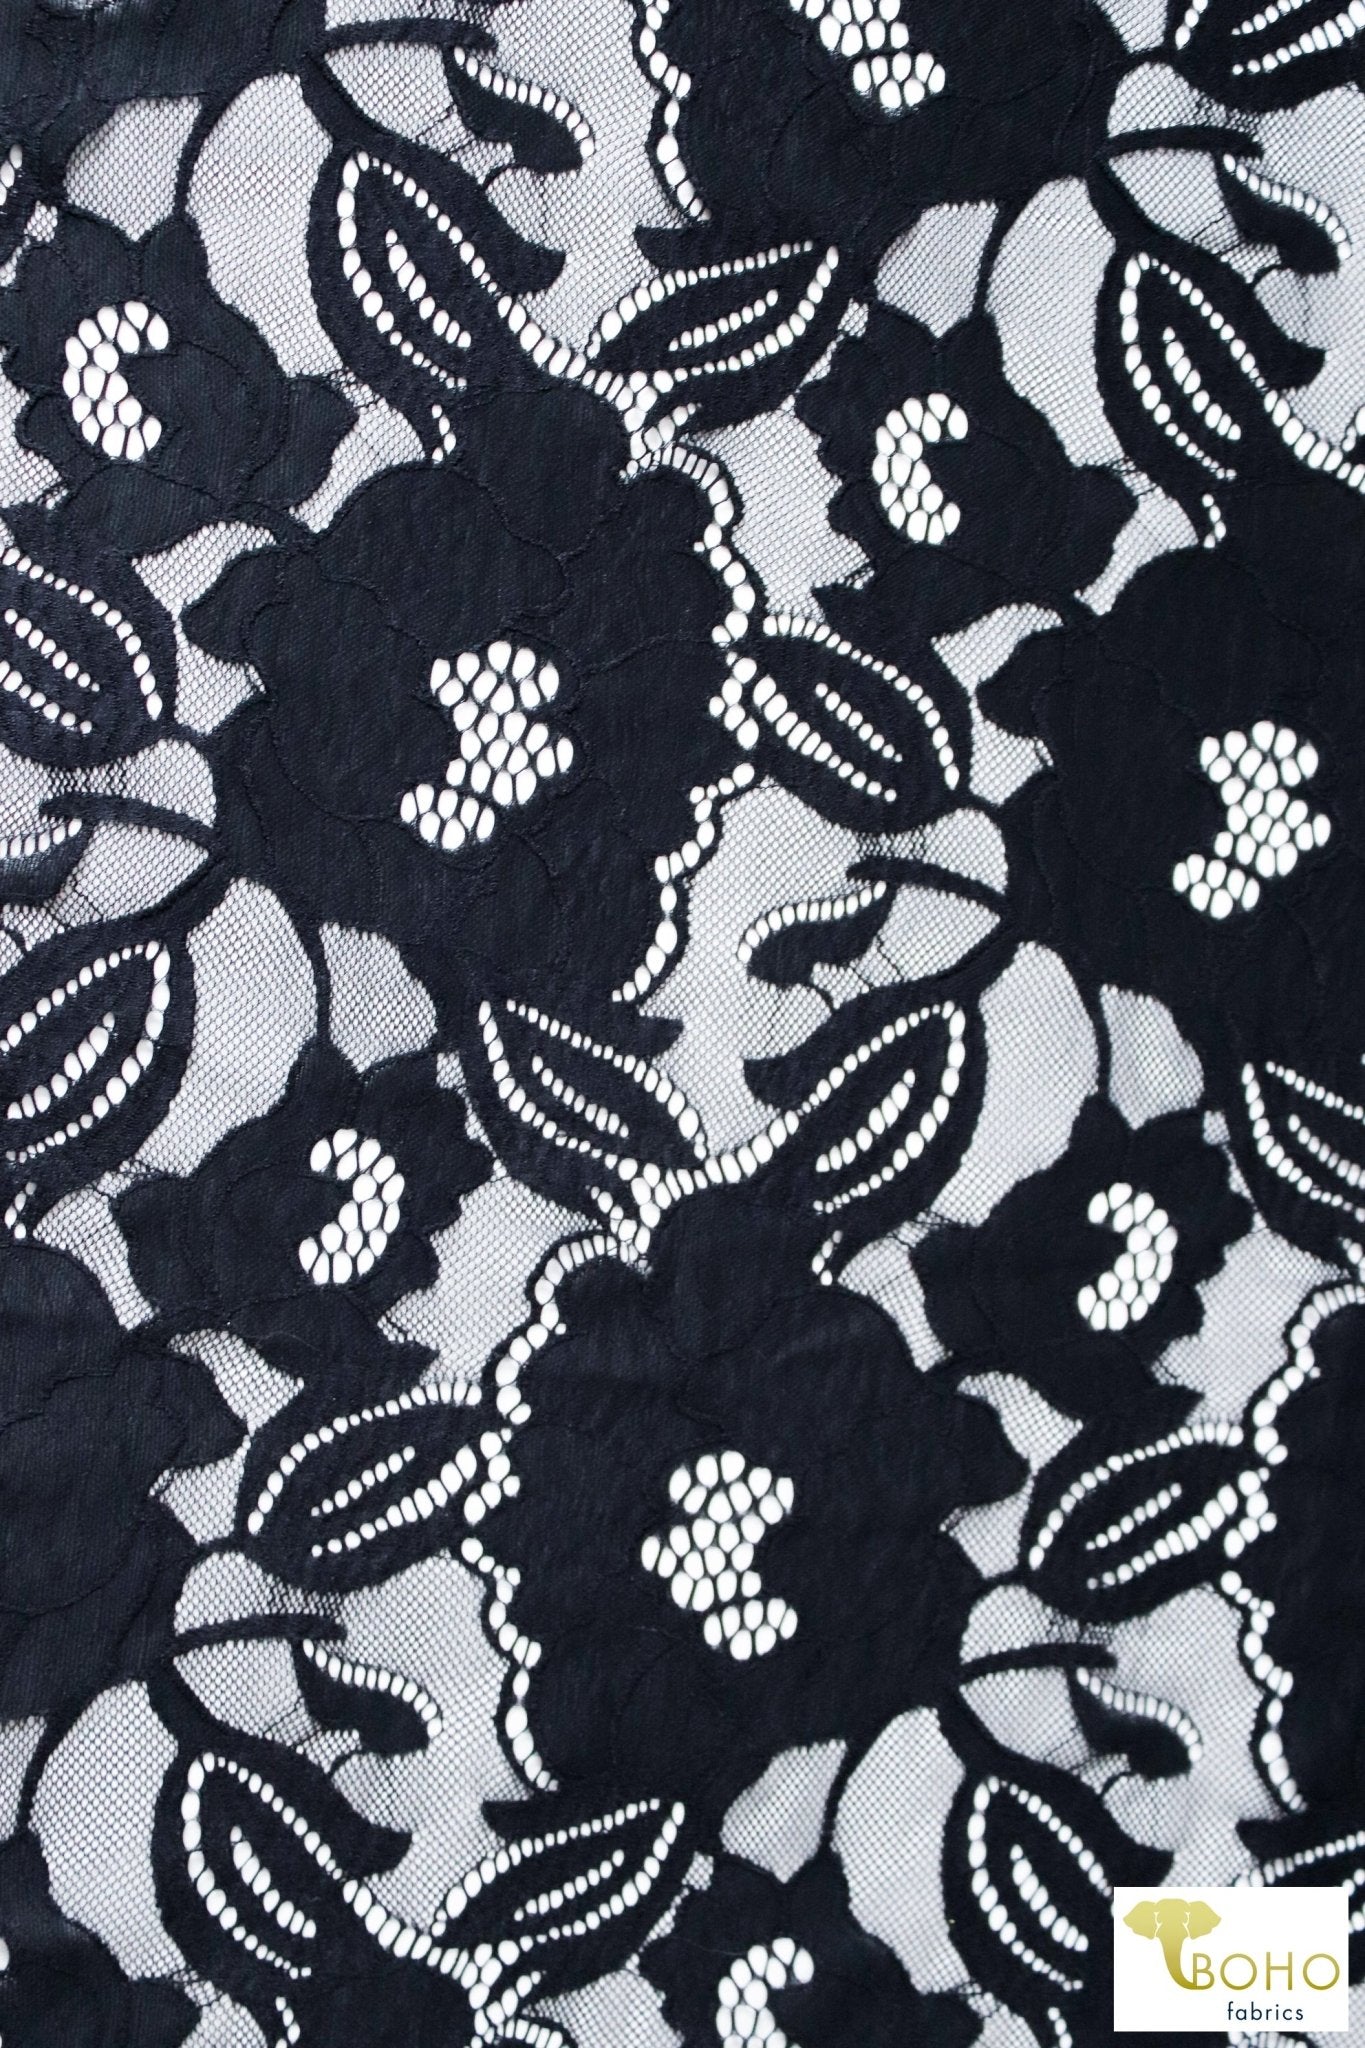 Peony Petals in Black. Stretch Lace Fabric. SL-127-BLK - Boho Fabrics